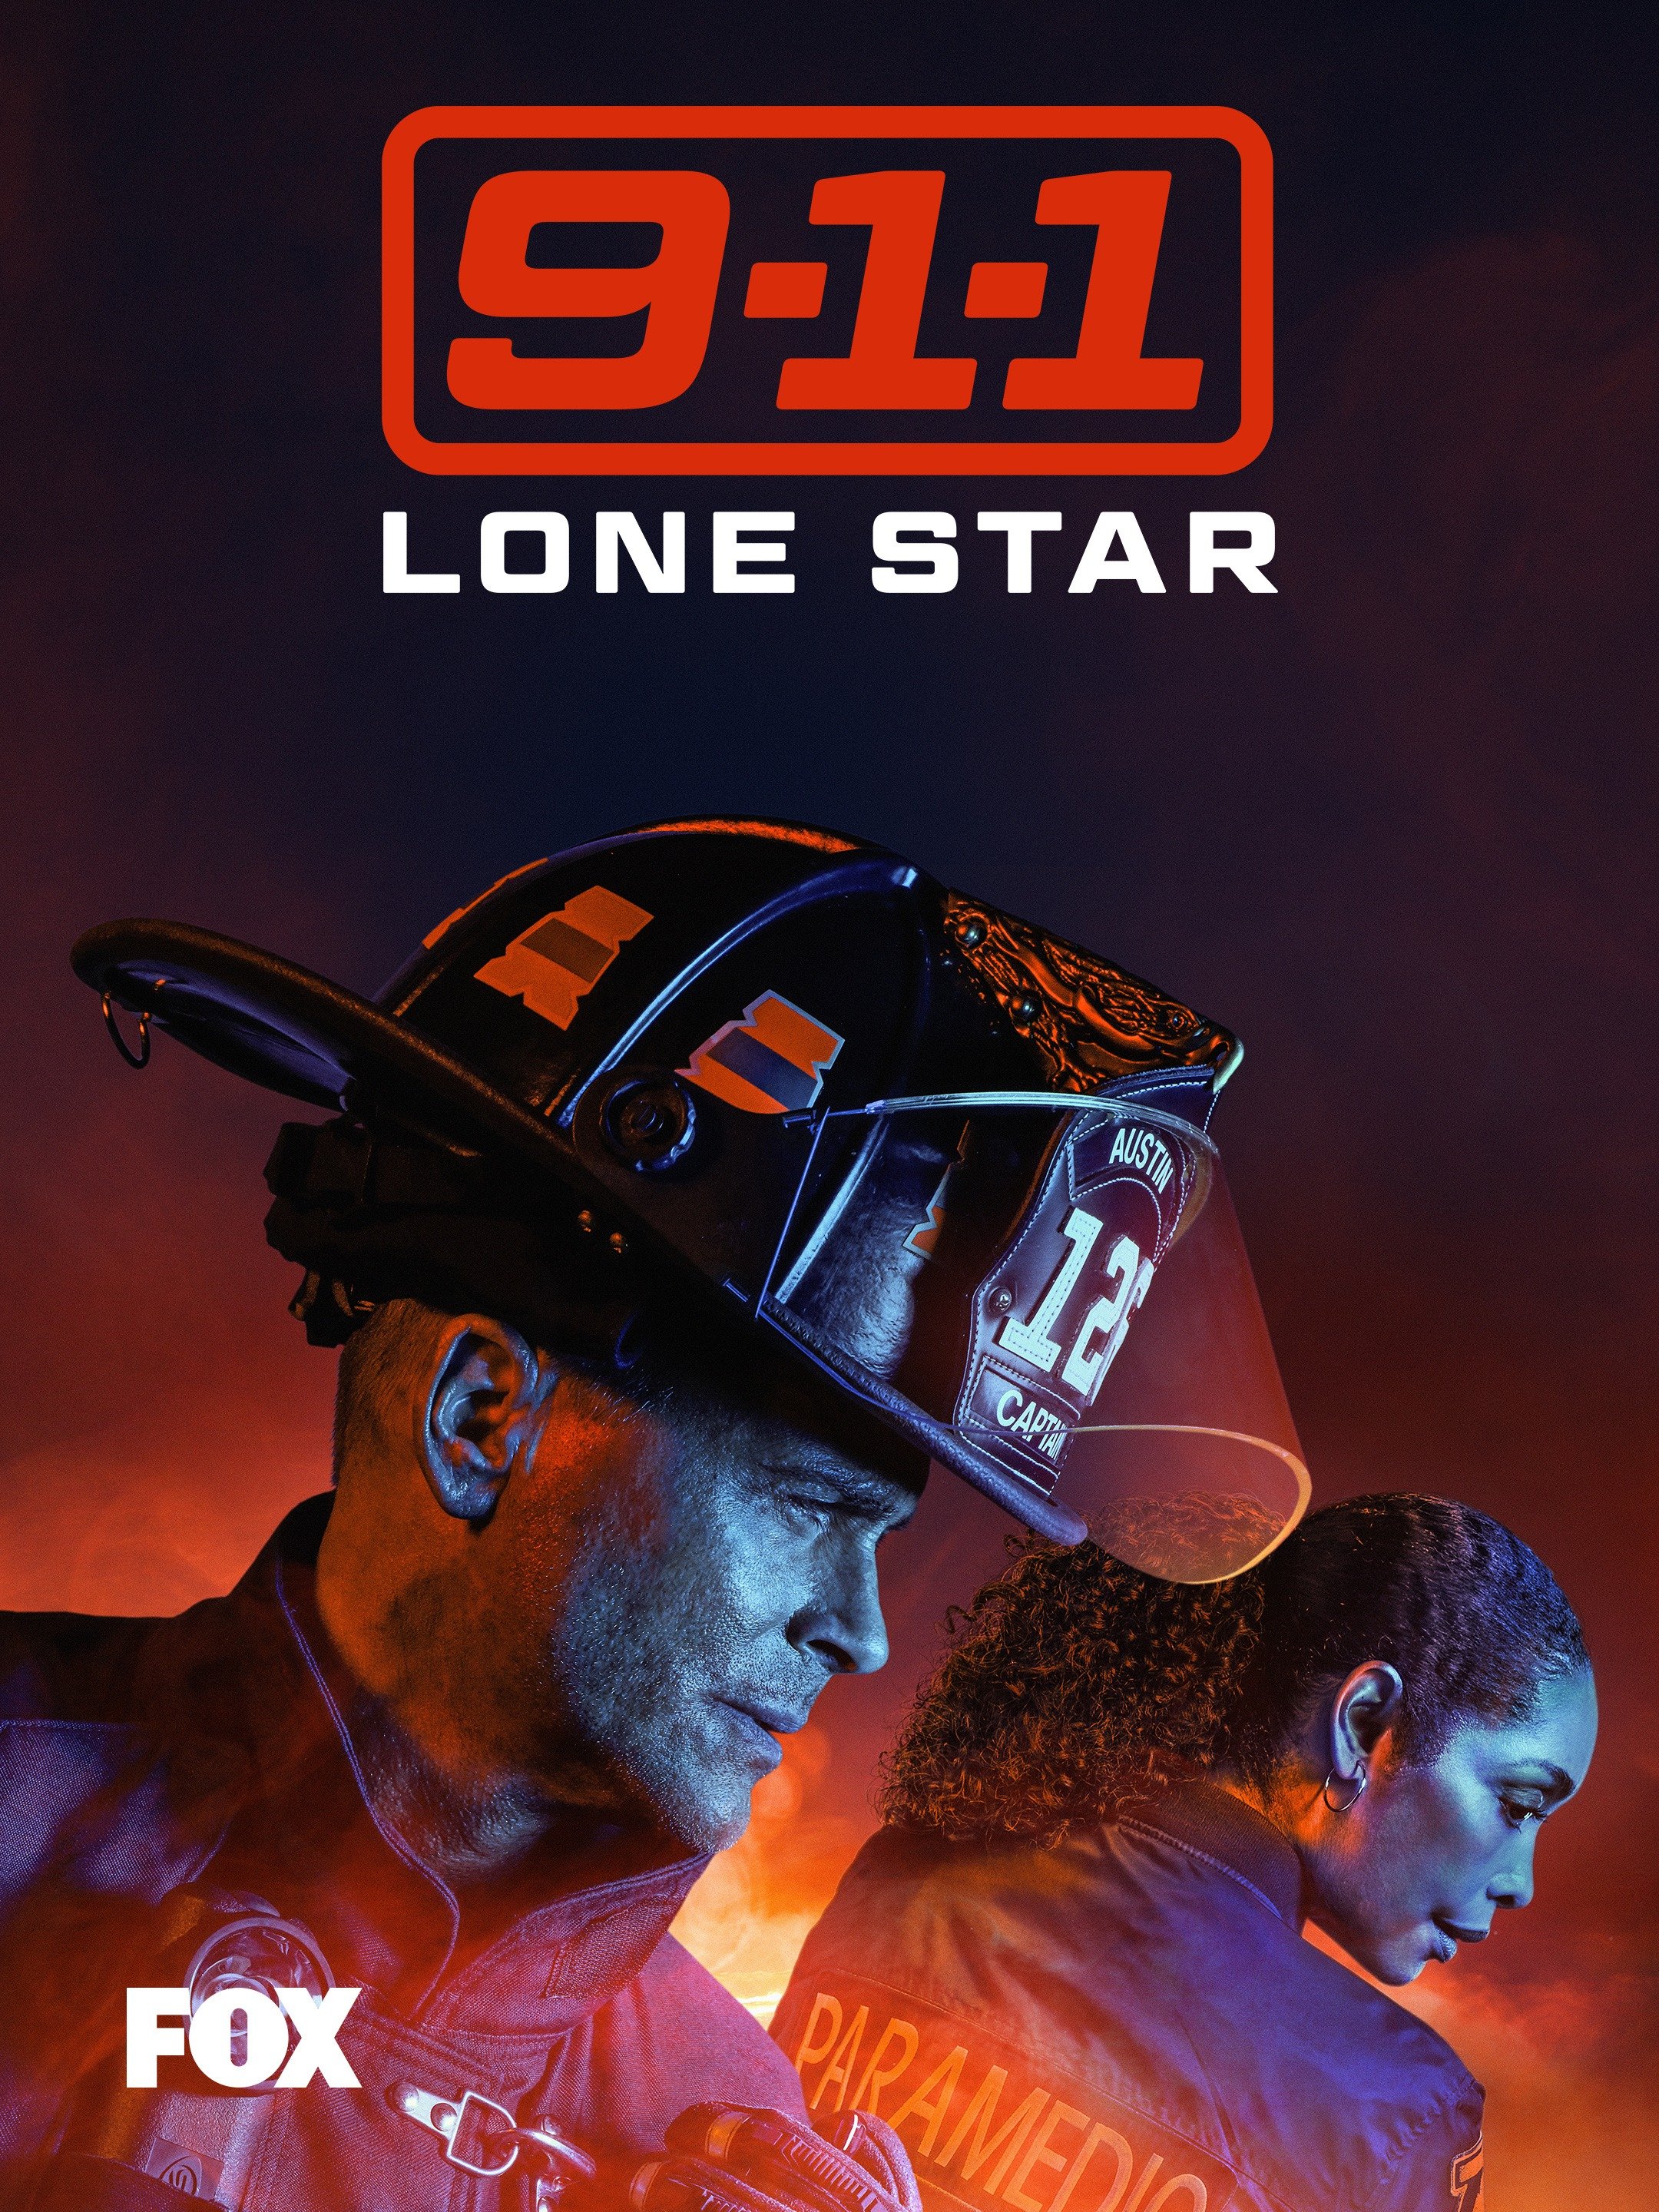 Lone star 911 season 1